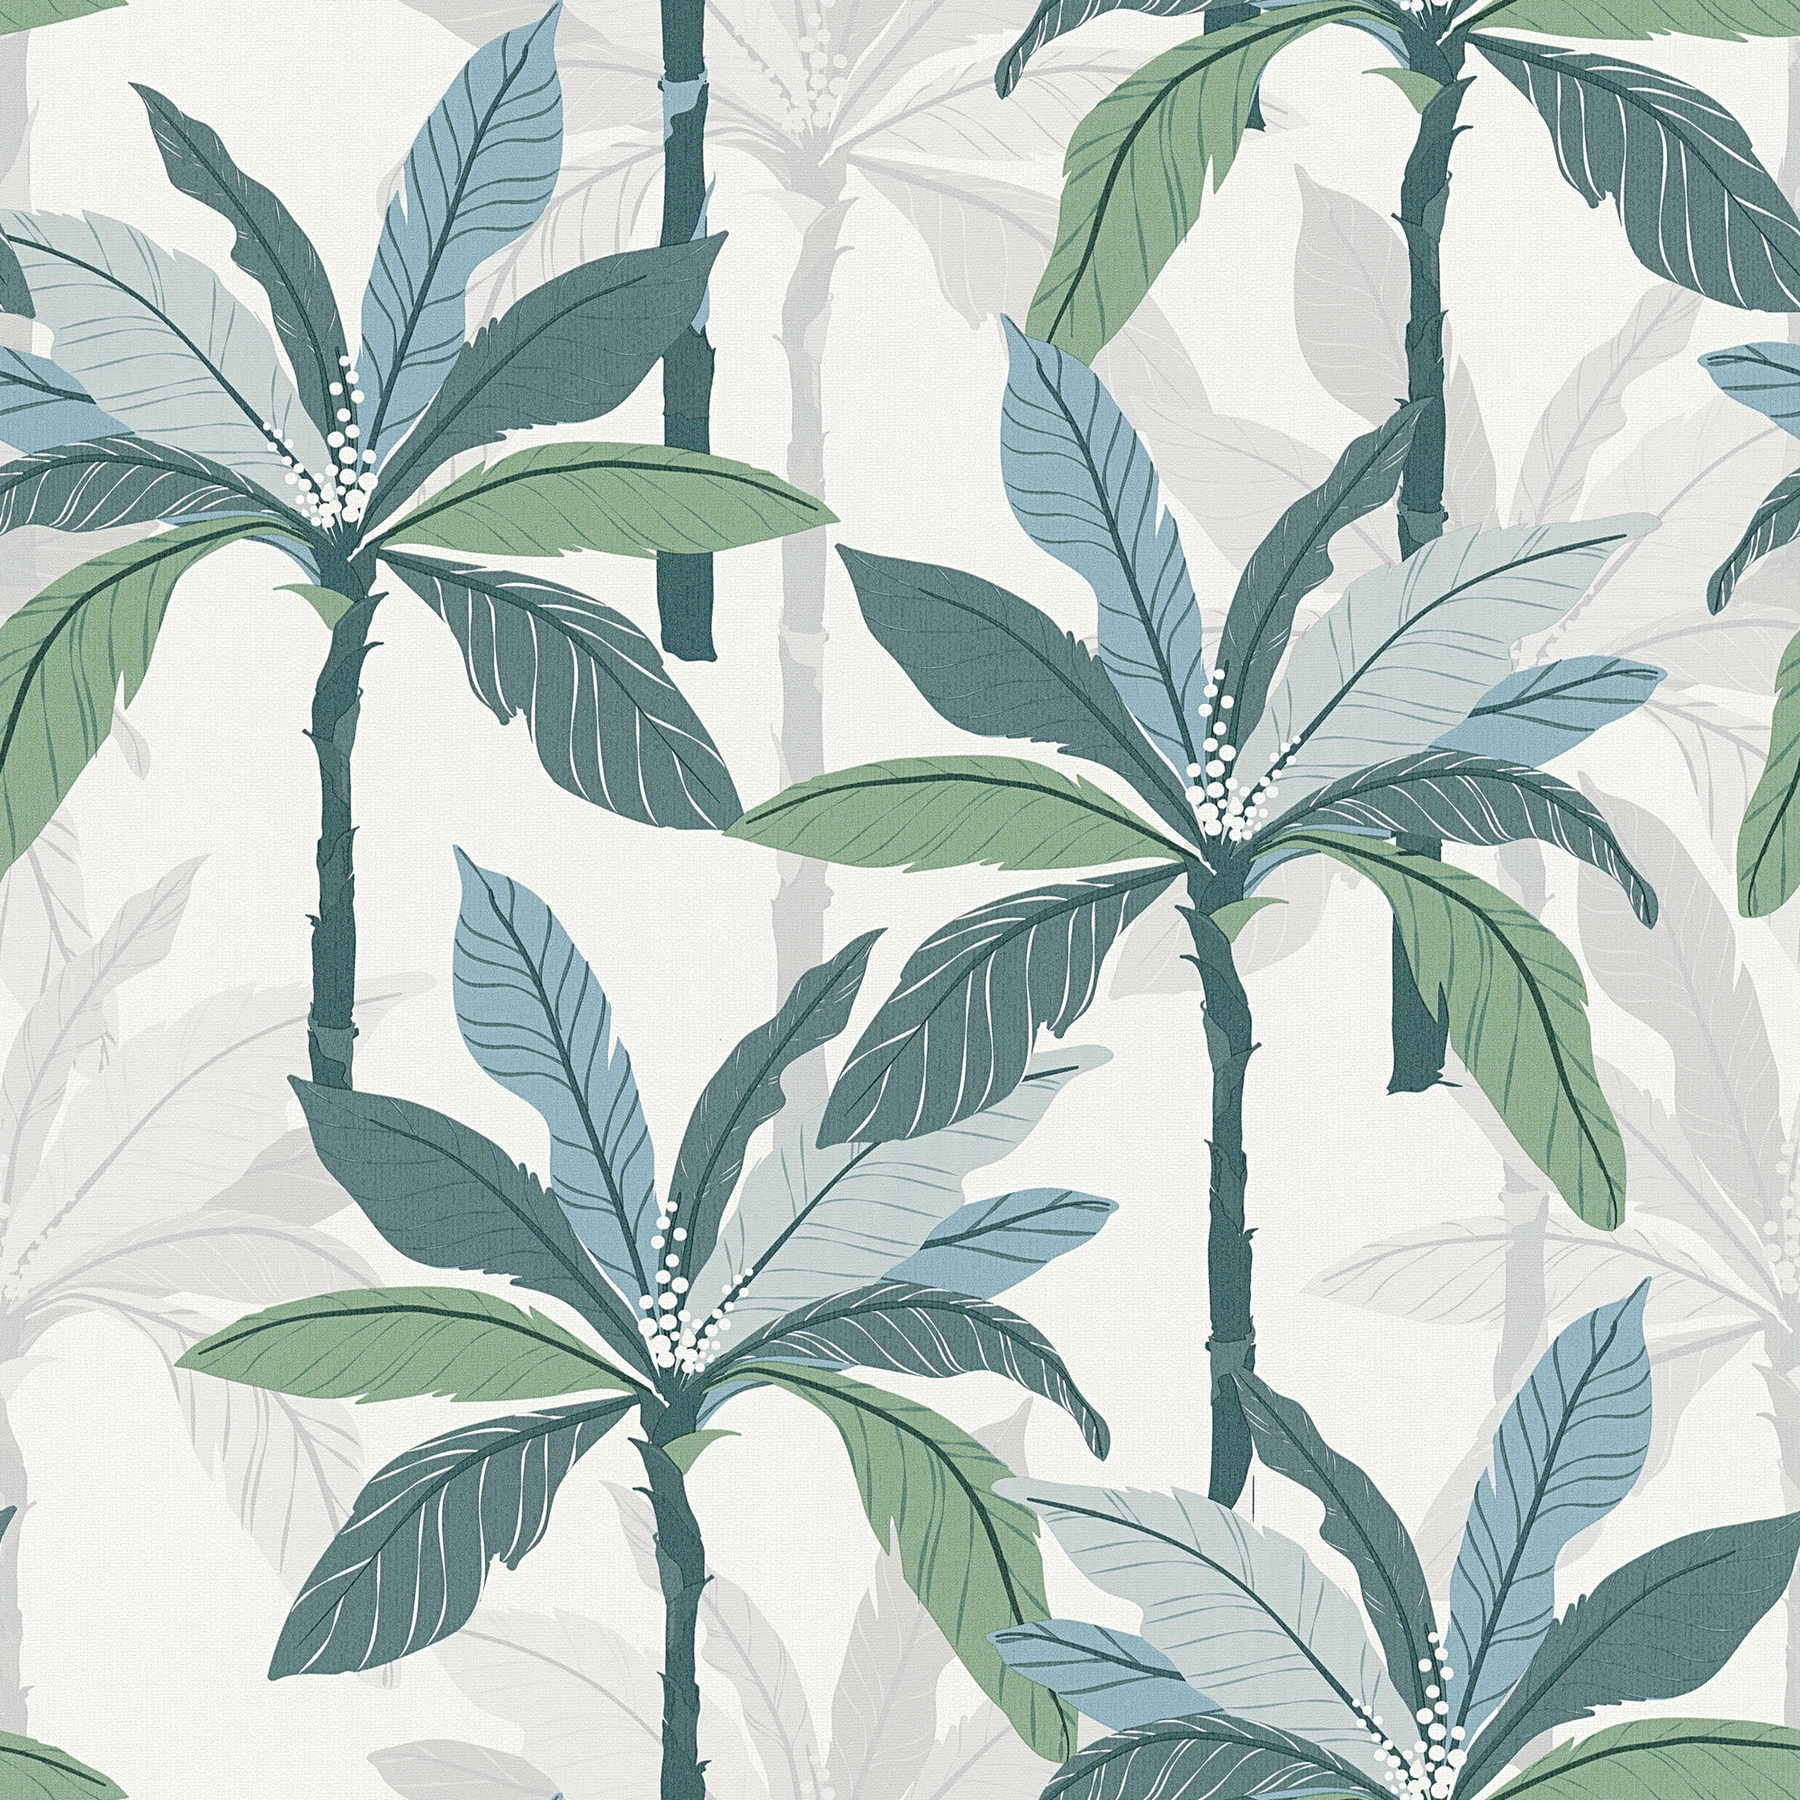 Tropics wallpaper with palm tree design - blue, green, white
